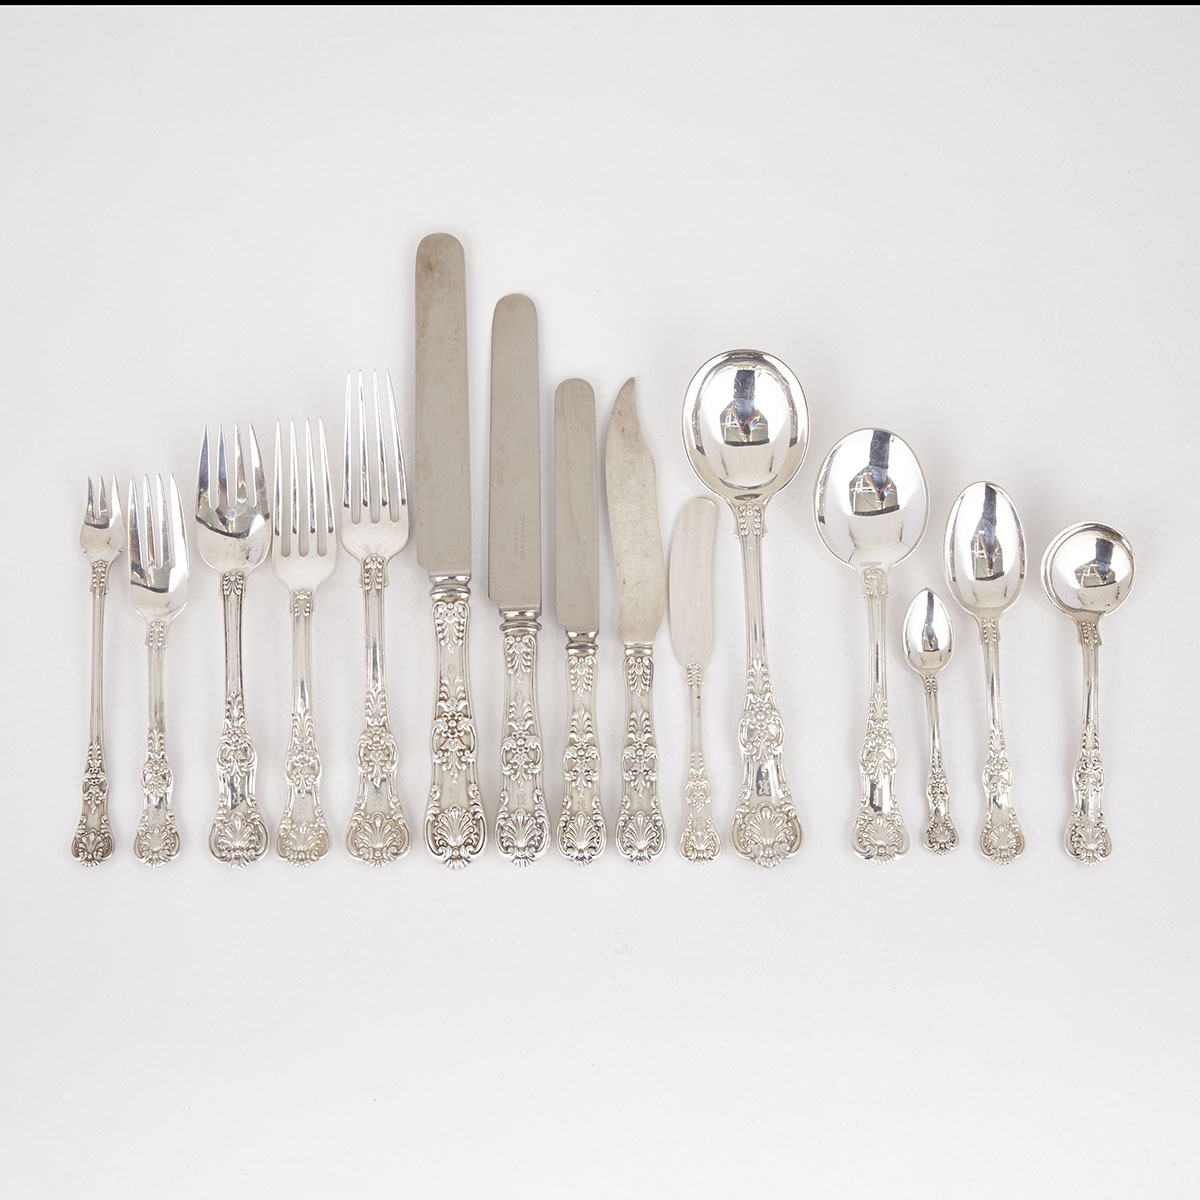 American Silver ‘English King’ Pattern Flatware Service, Tiffany & Co., New York, N.Y., early 20th century